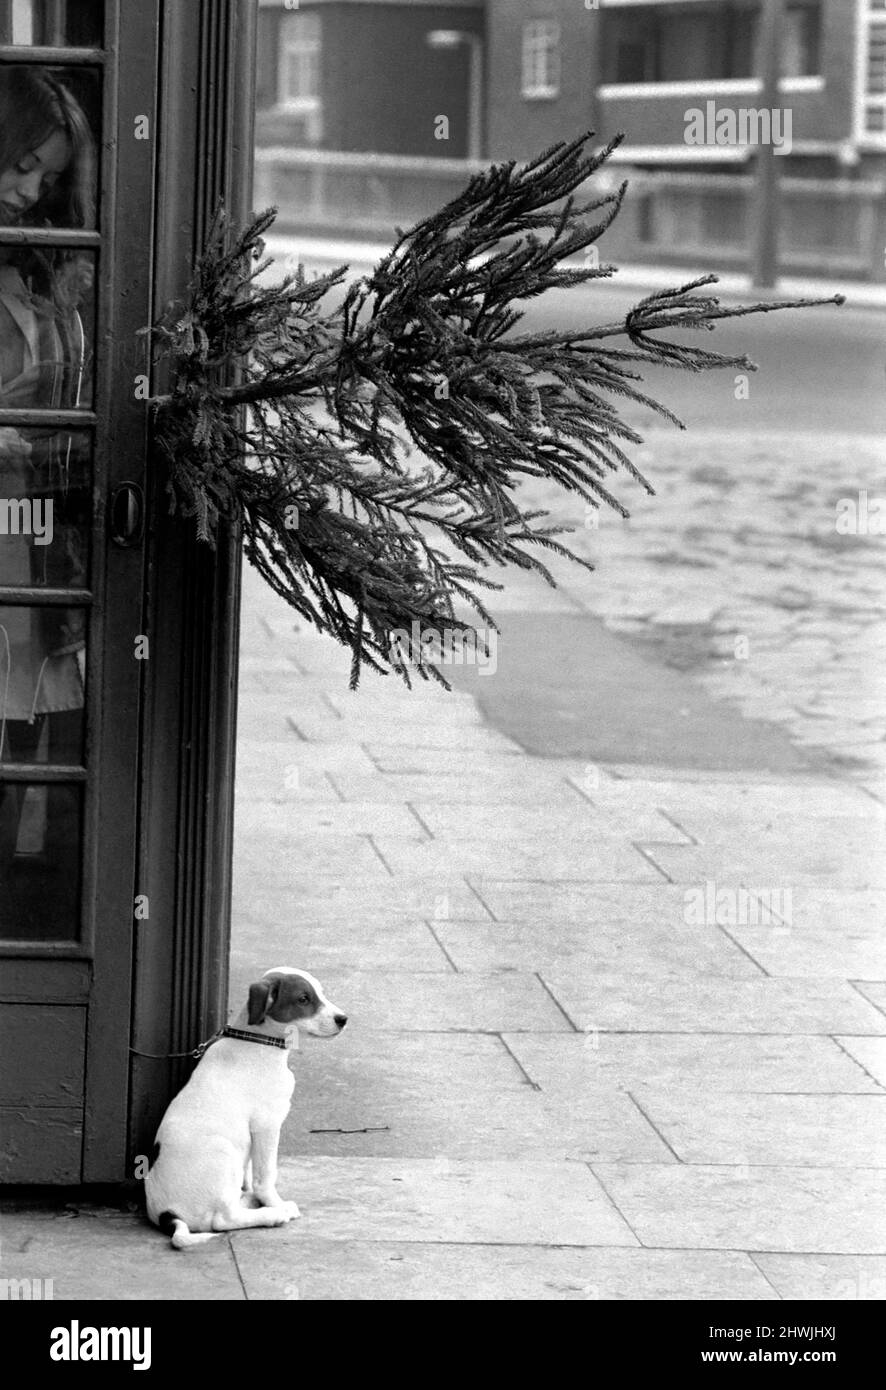 Animal, Cute: Puppy Dog outside Telephone Box. December 1972 72-11831-001 Stock Photo